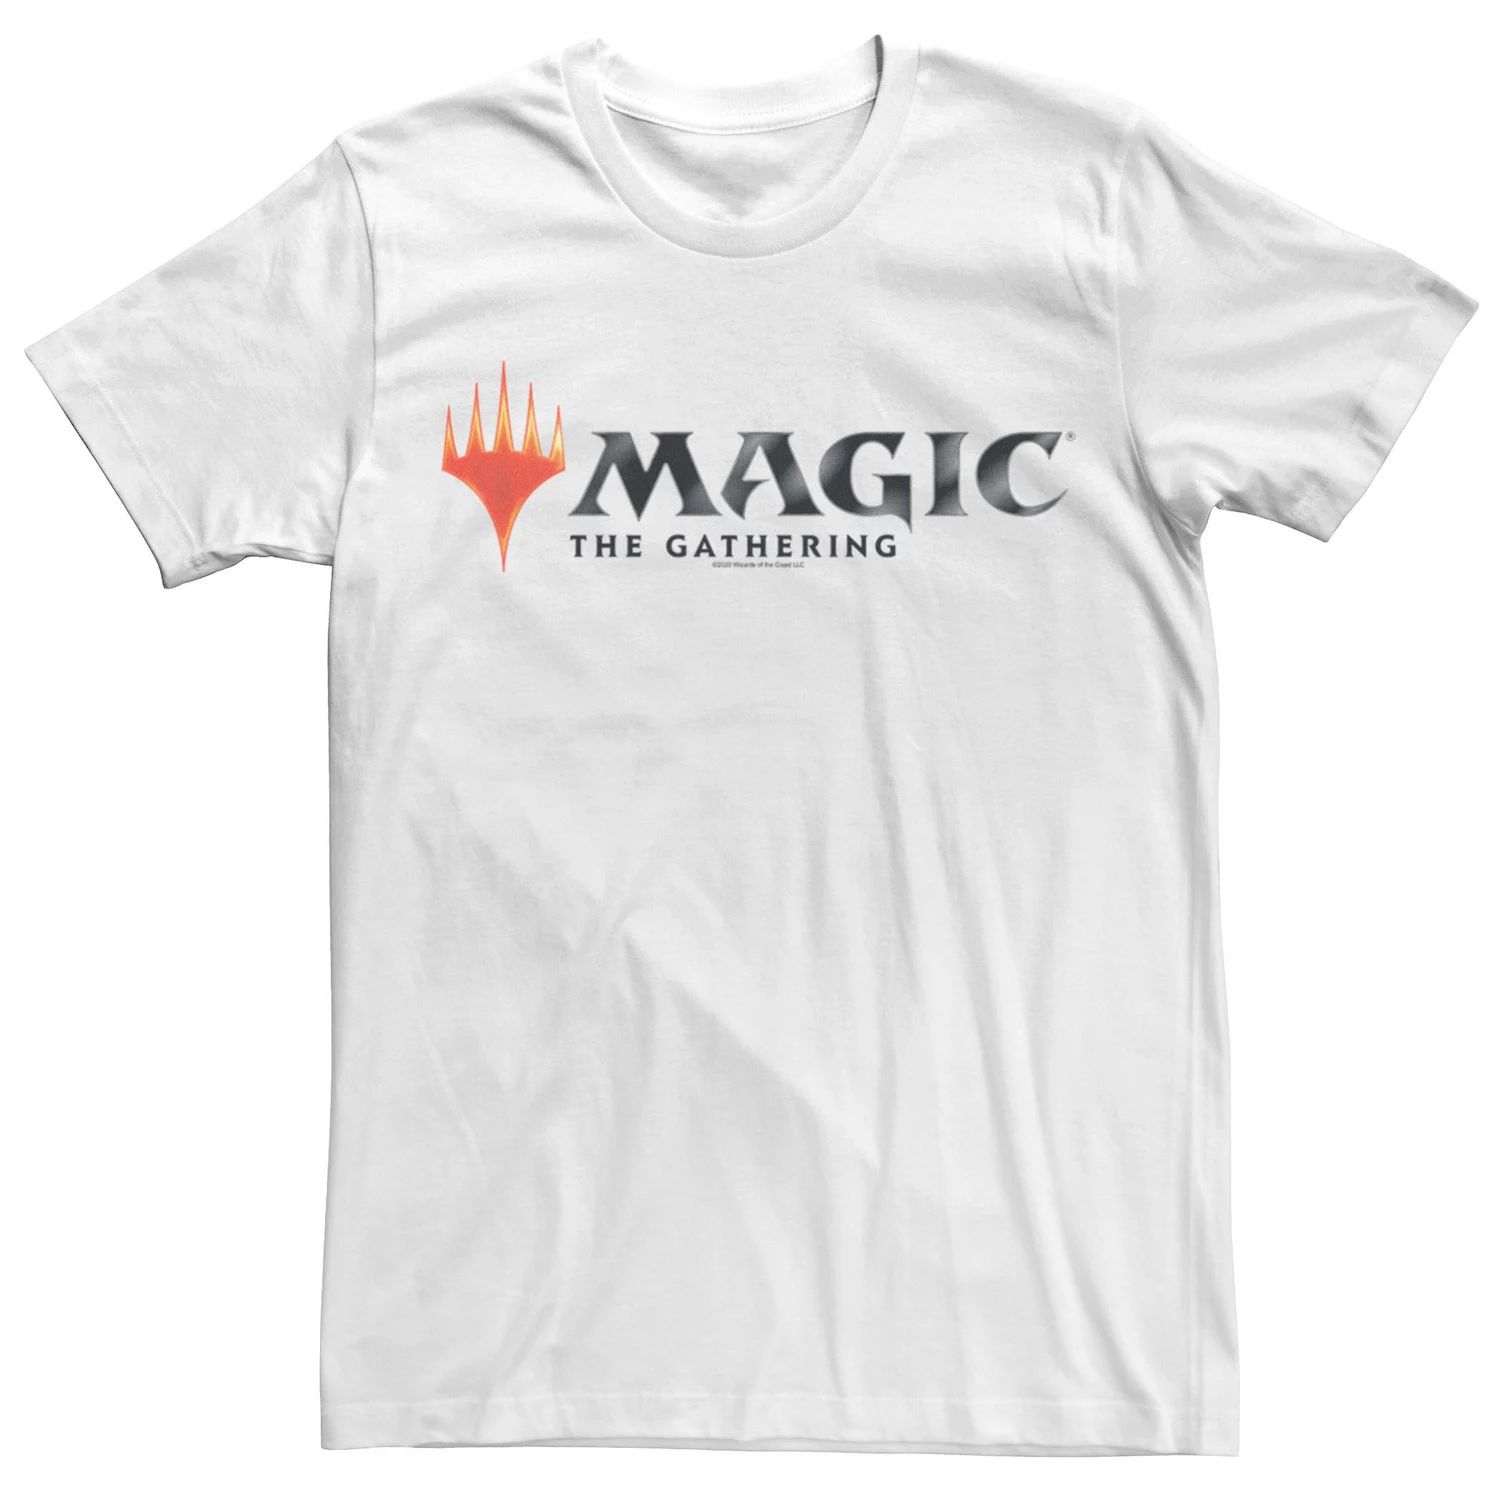 Мужская футболка с логотипом Magic The Gathering Licensed Character